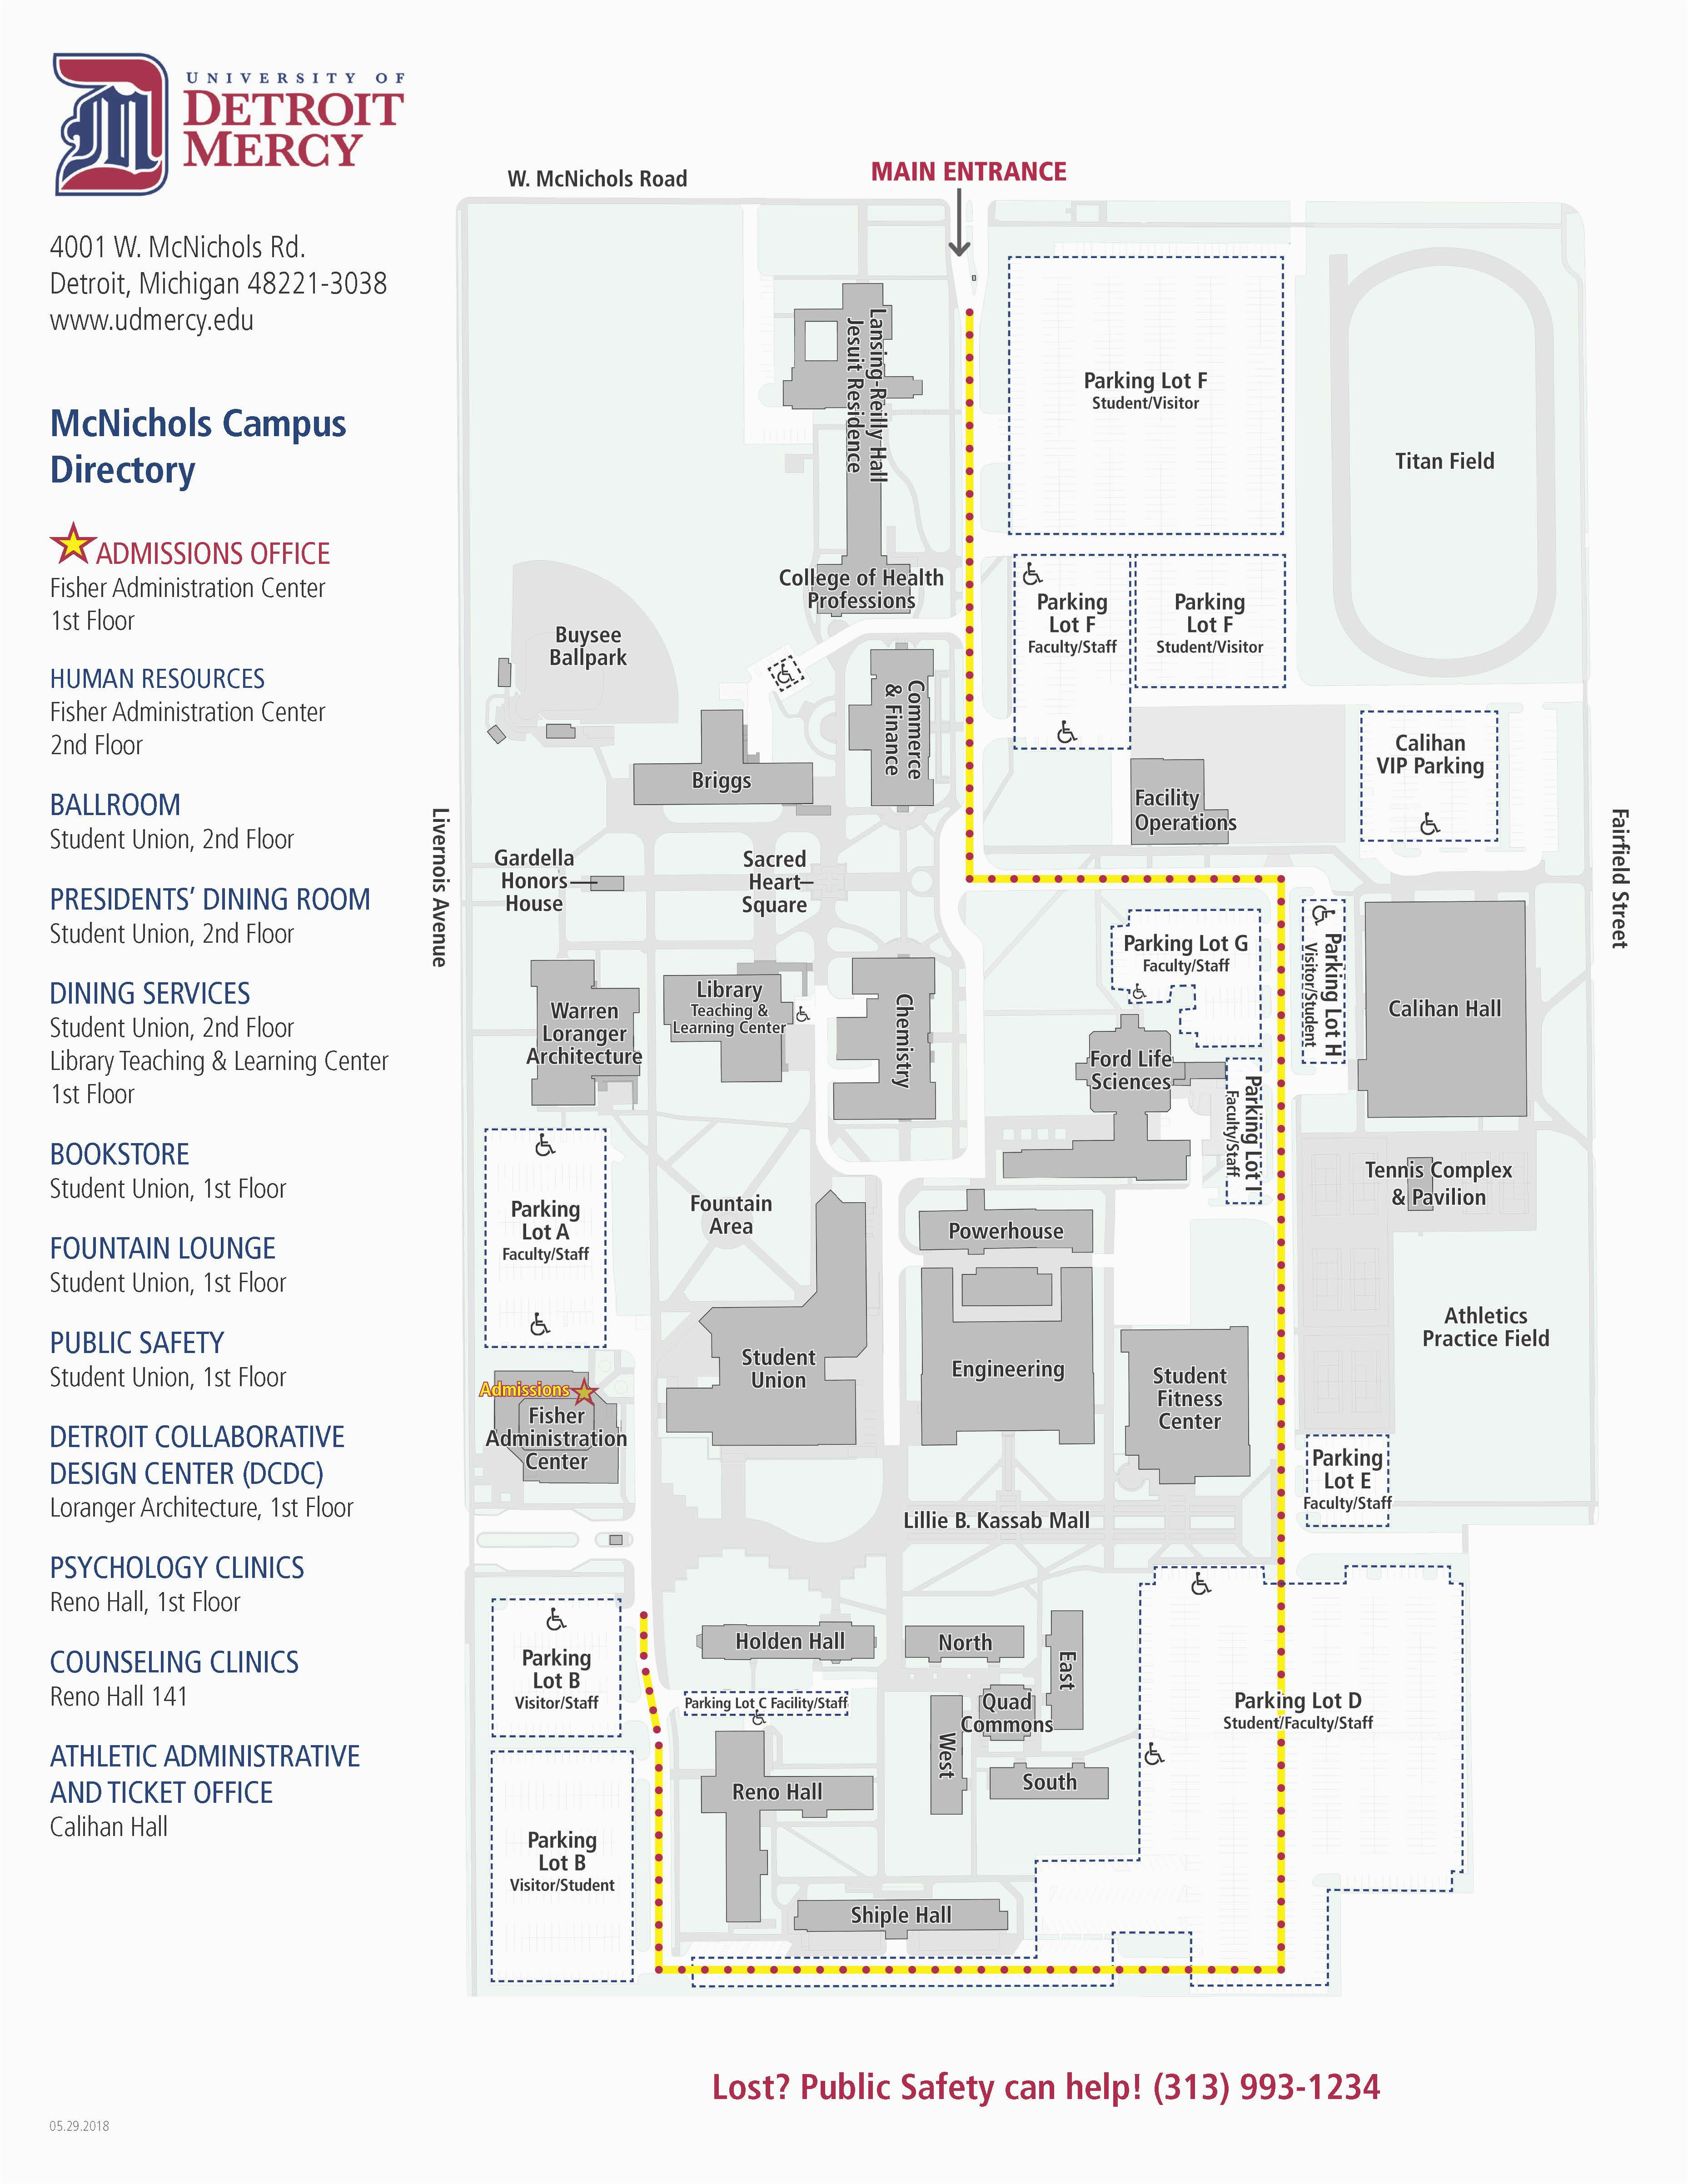 campus locations university of detroit mercy